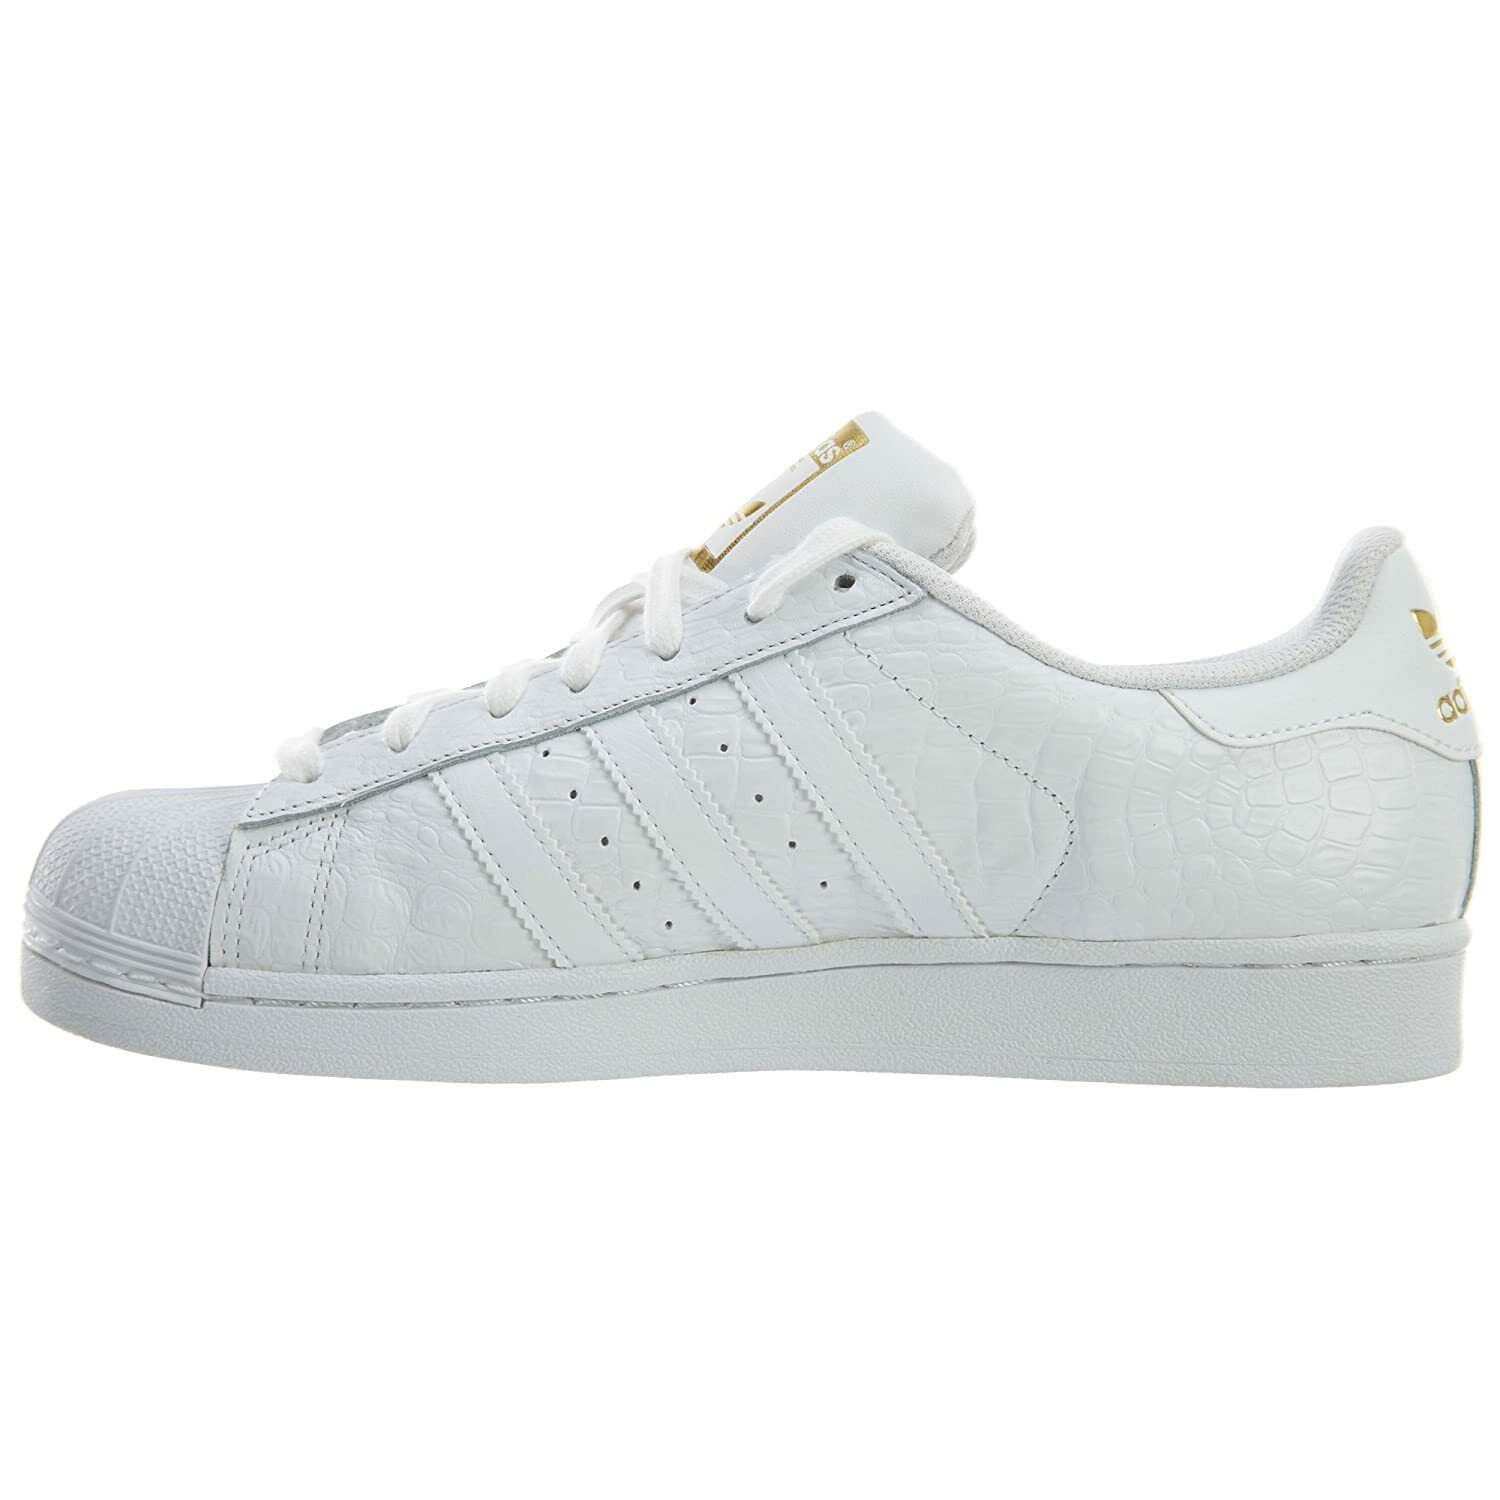 Adidas Originals Superstar Croc AQ6686 Men's White Leather Sneaker 